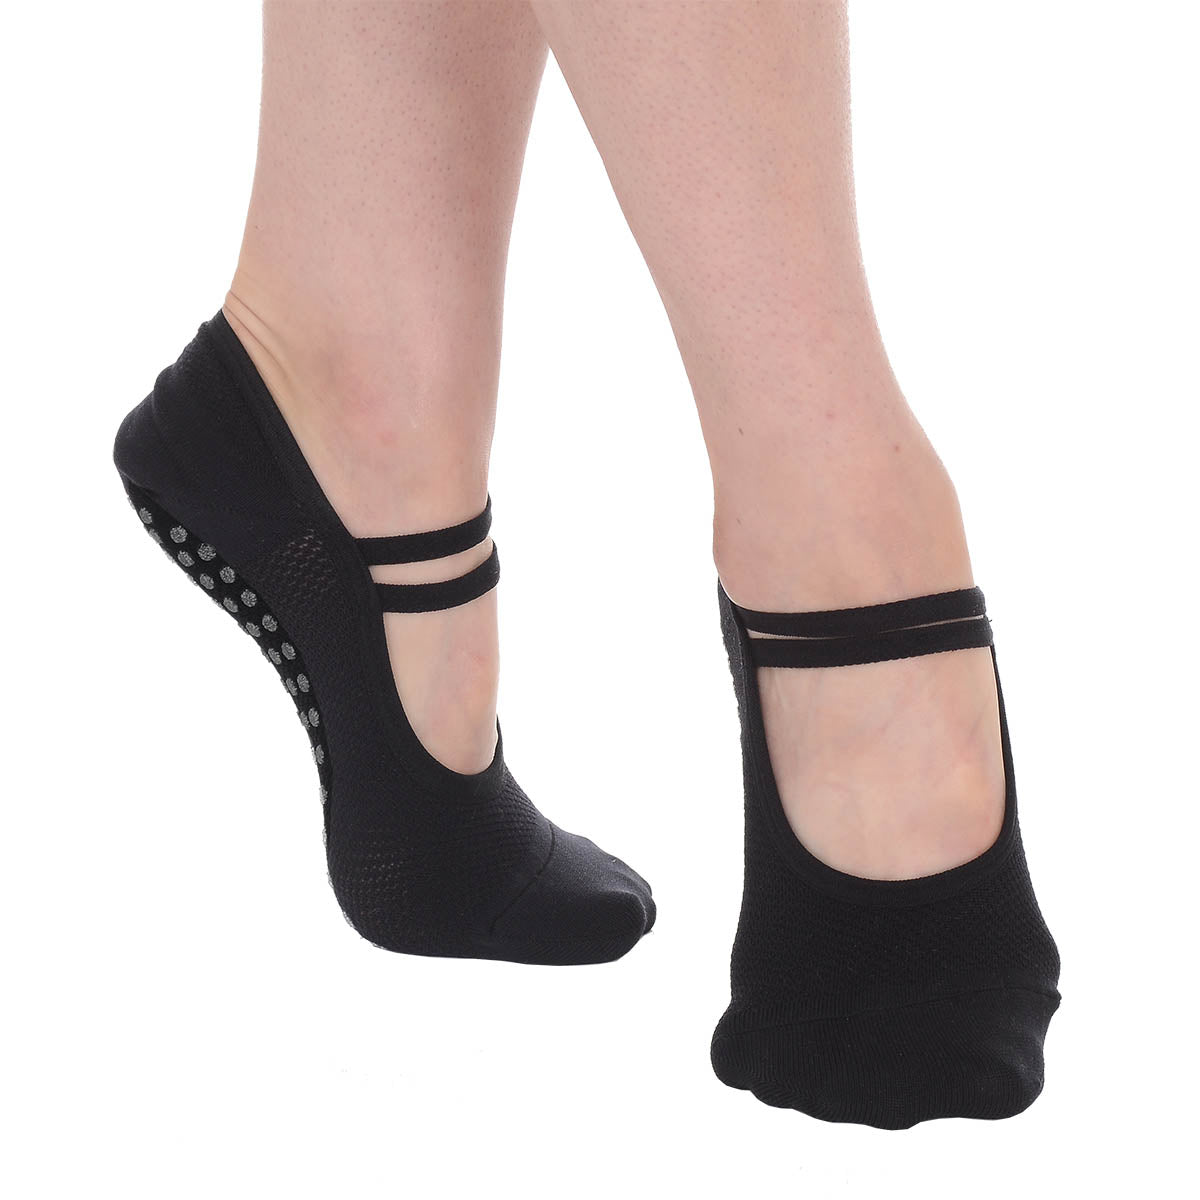 ODODOS Women's Yoga Socks with Grips, Non-Slip Cotton Socks for Pilates,  Pure Barre, Ballet, Dance, Barefoot Workout, Fitness, Black+gray-strap